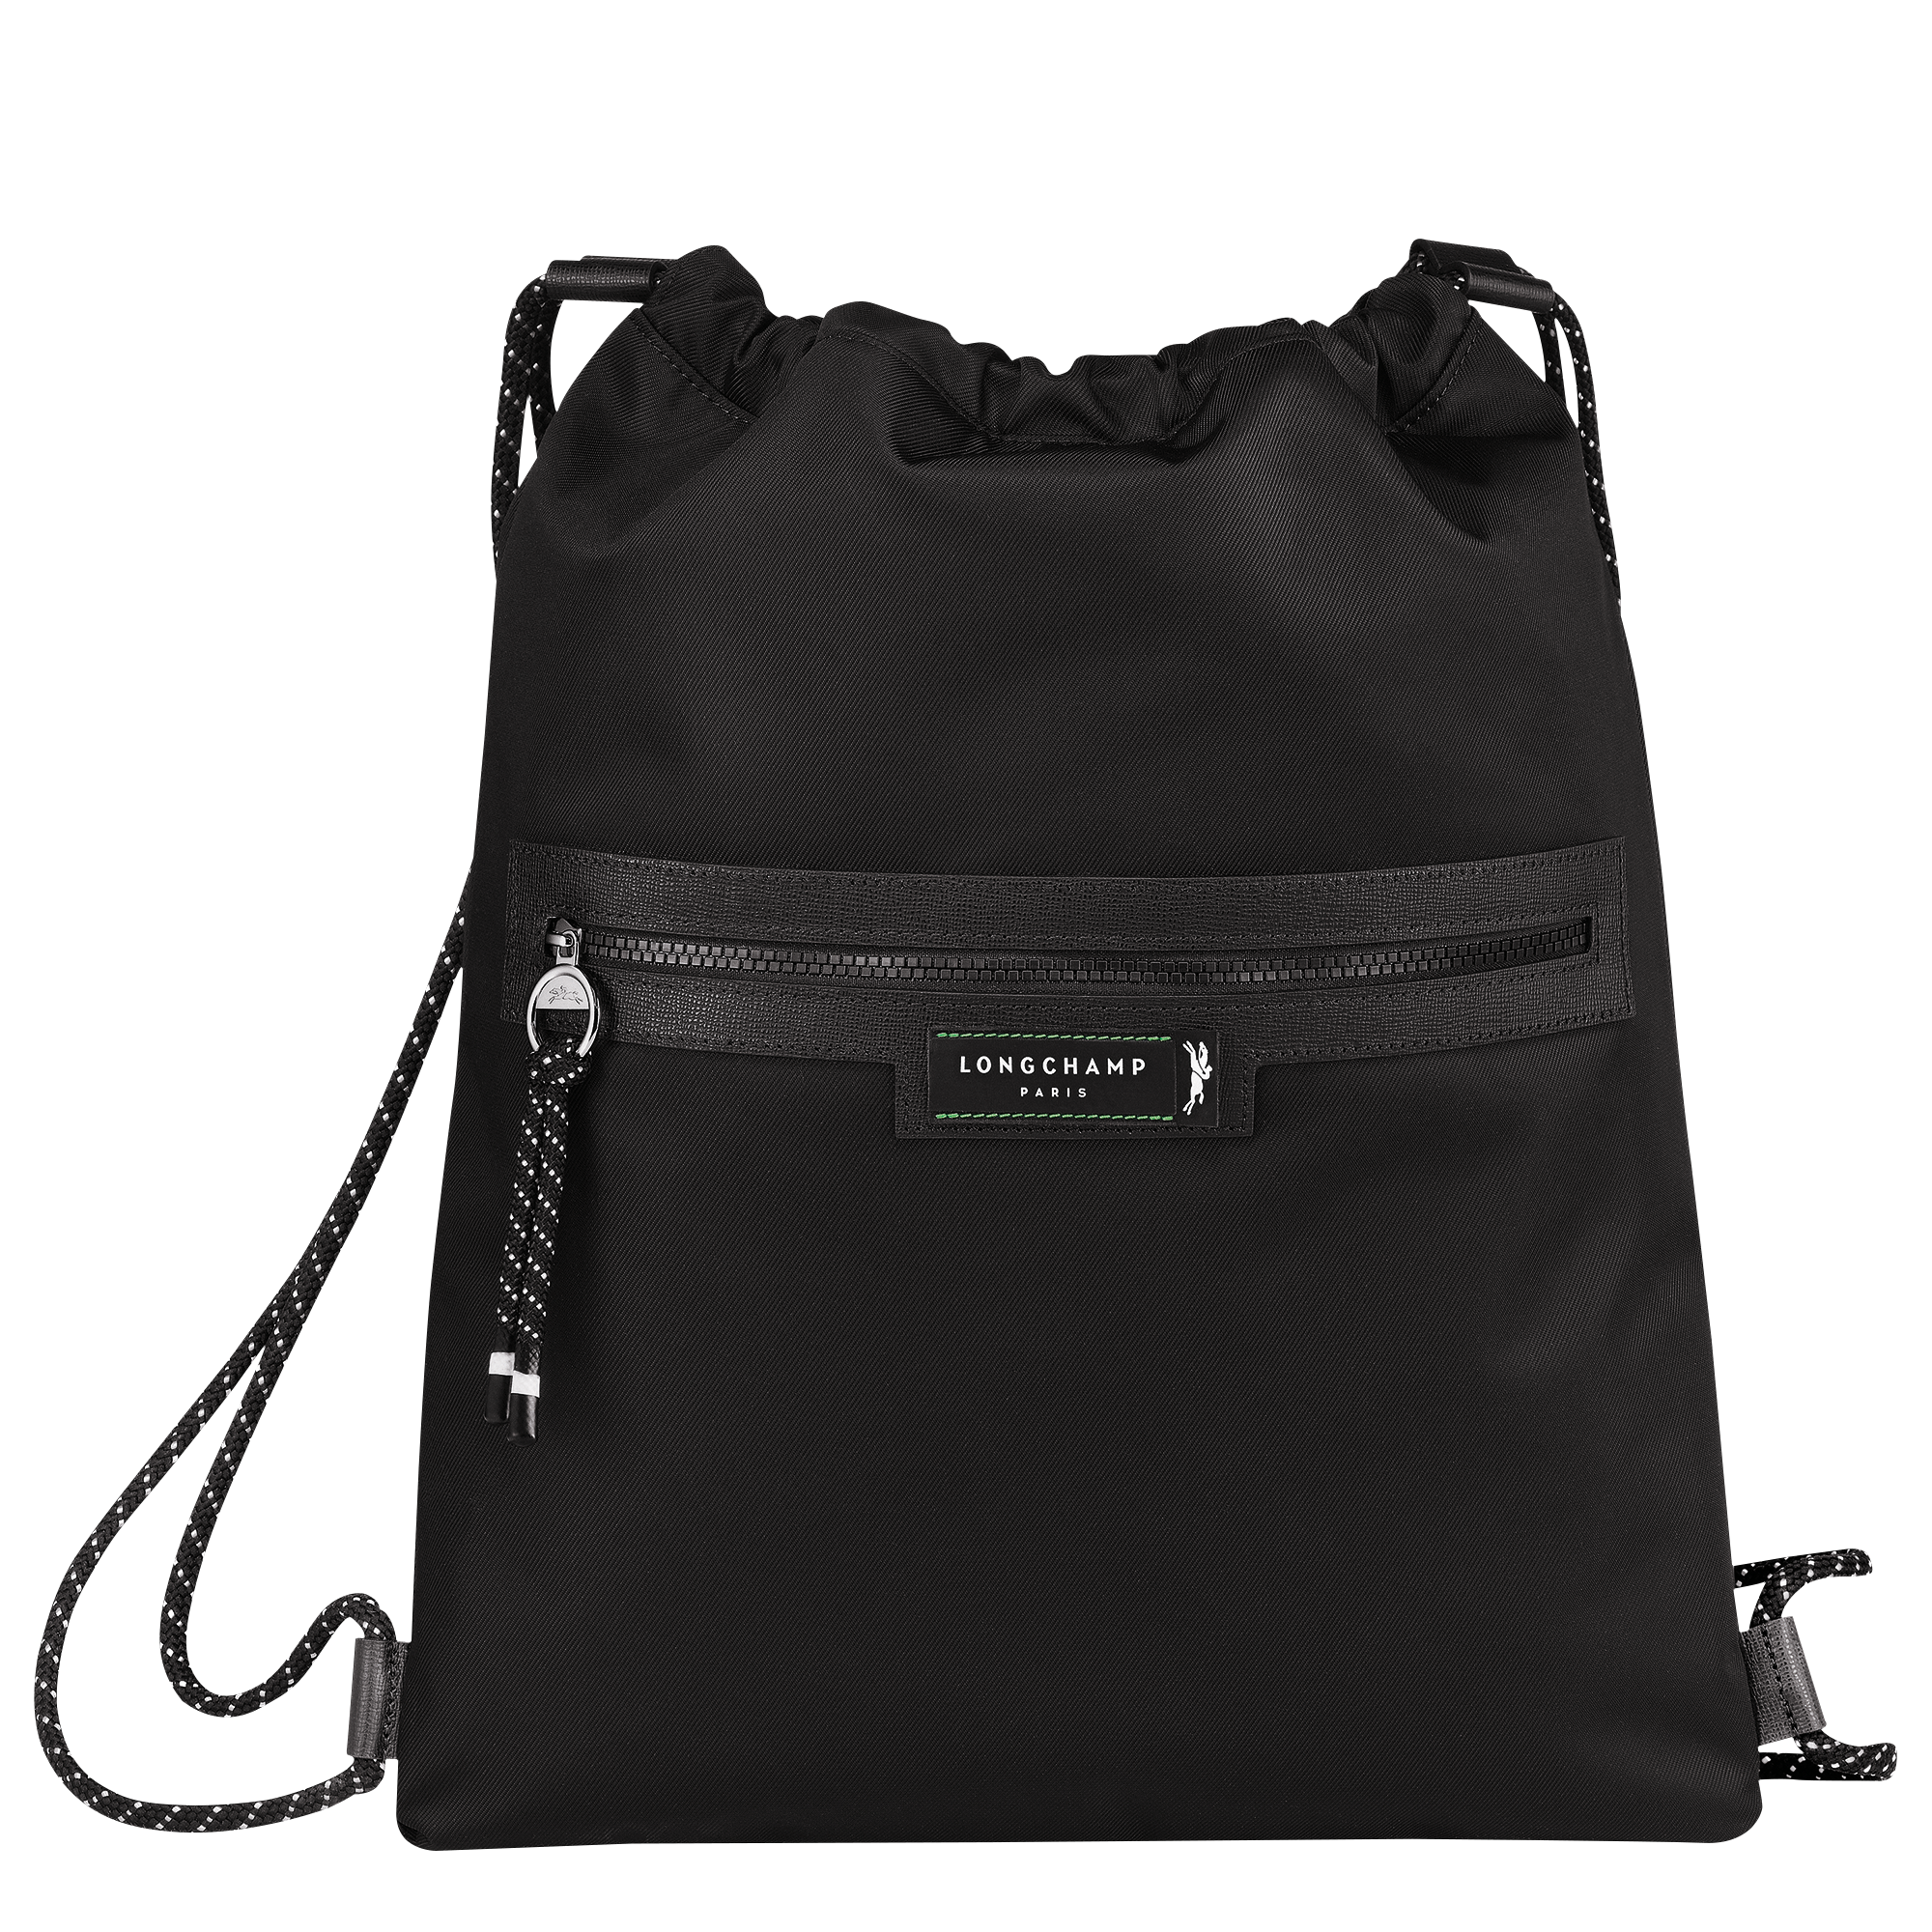 longchamp backpack green